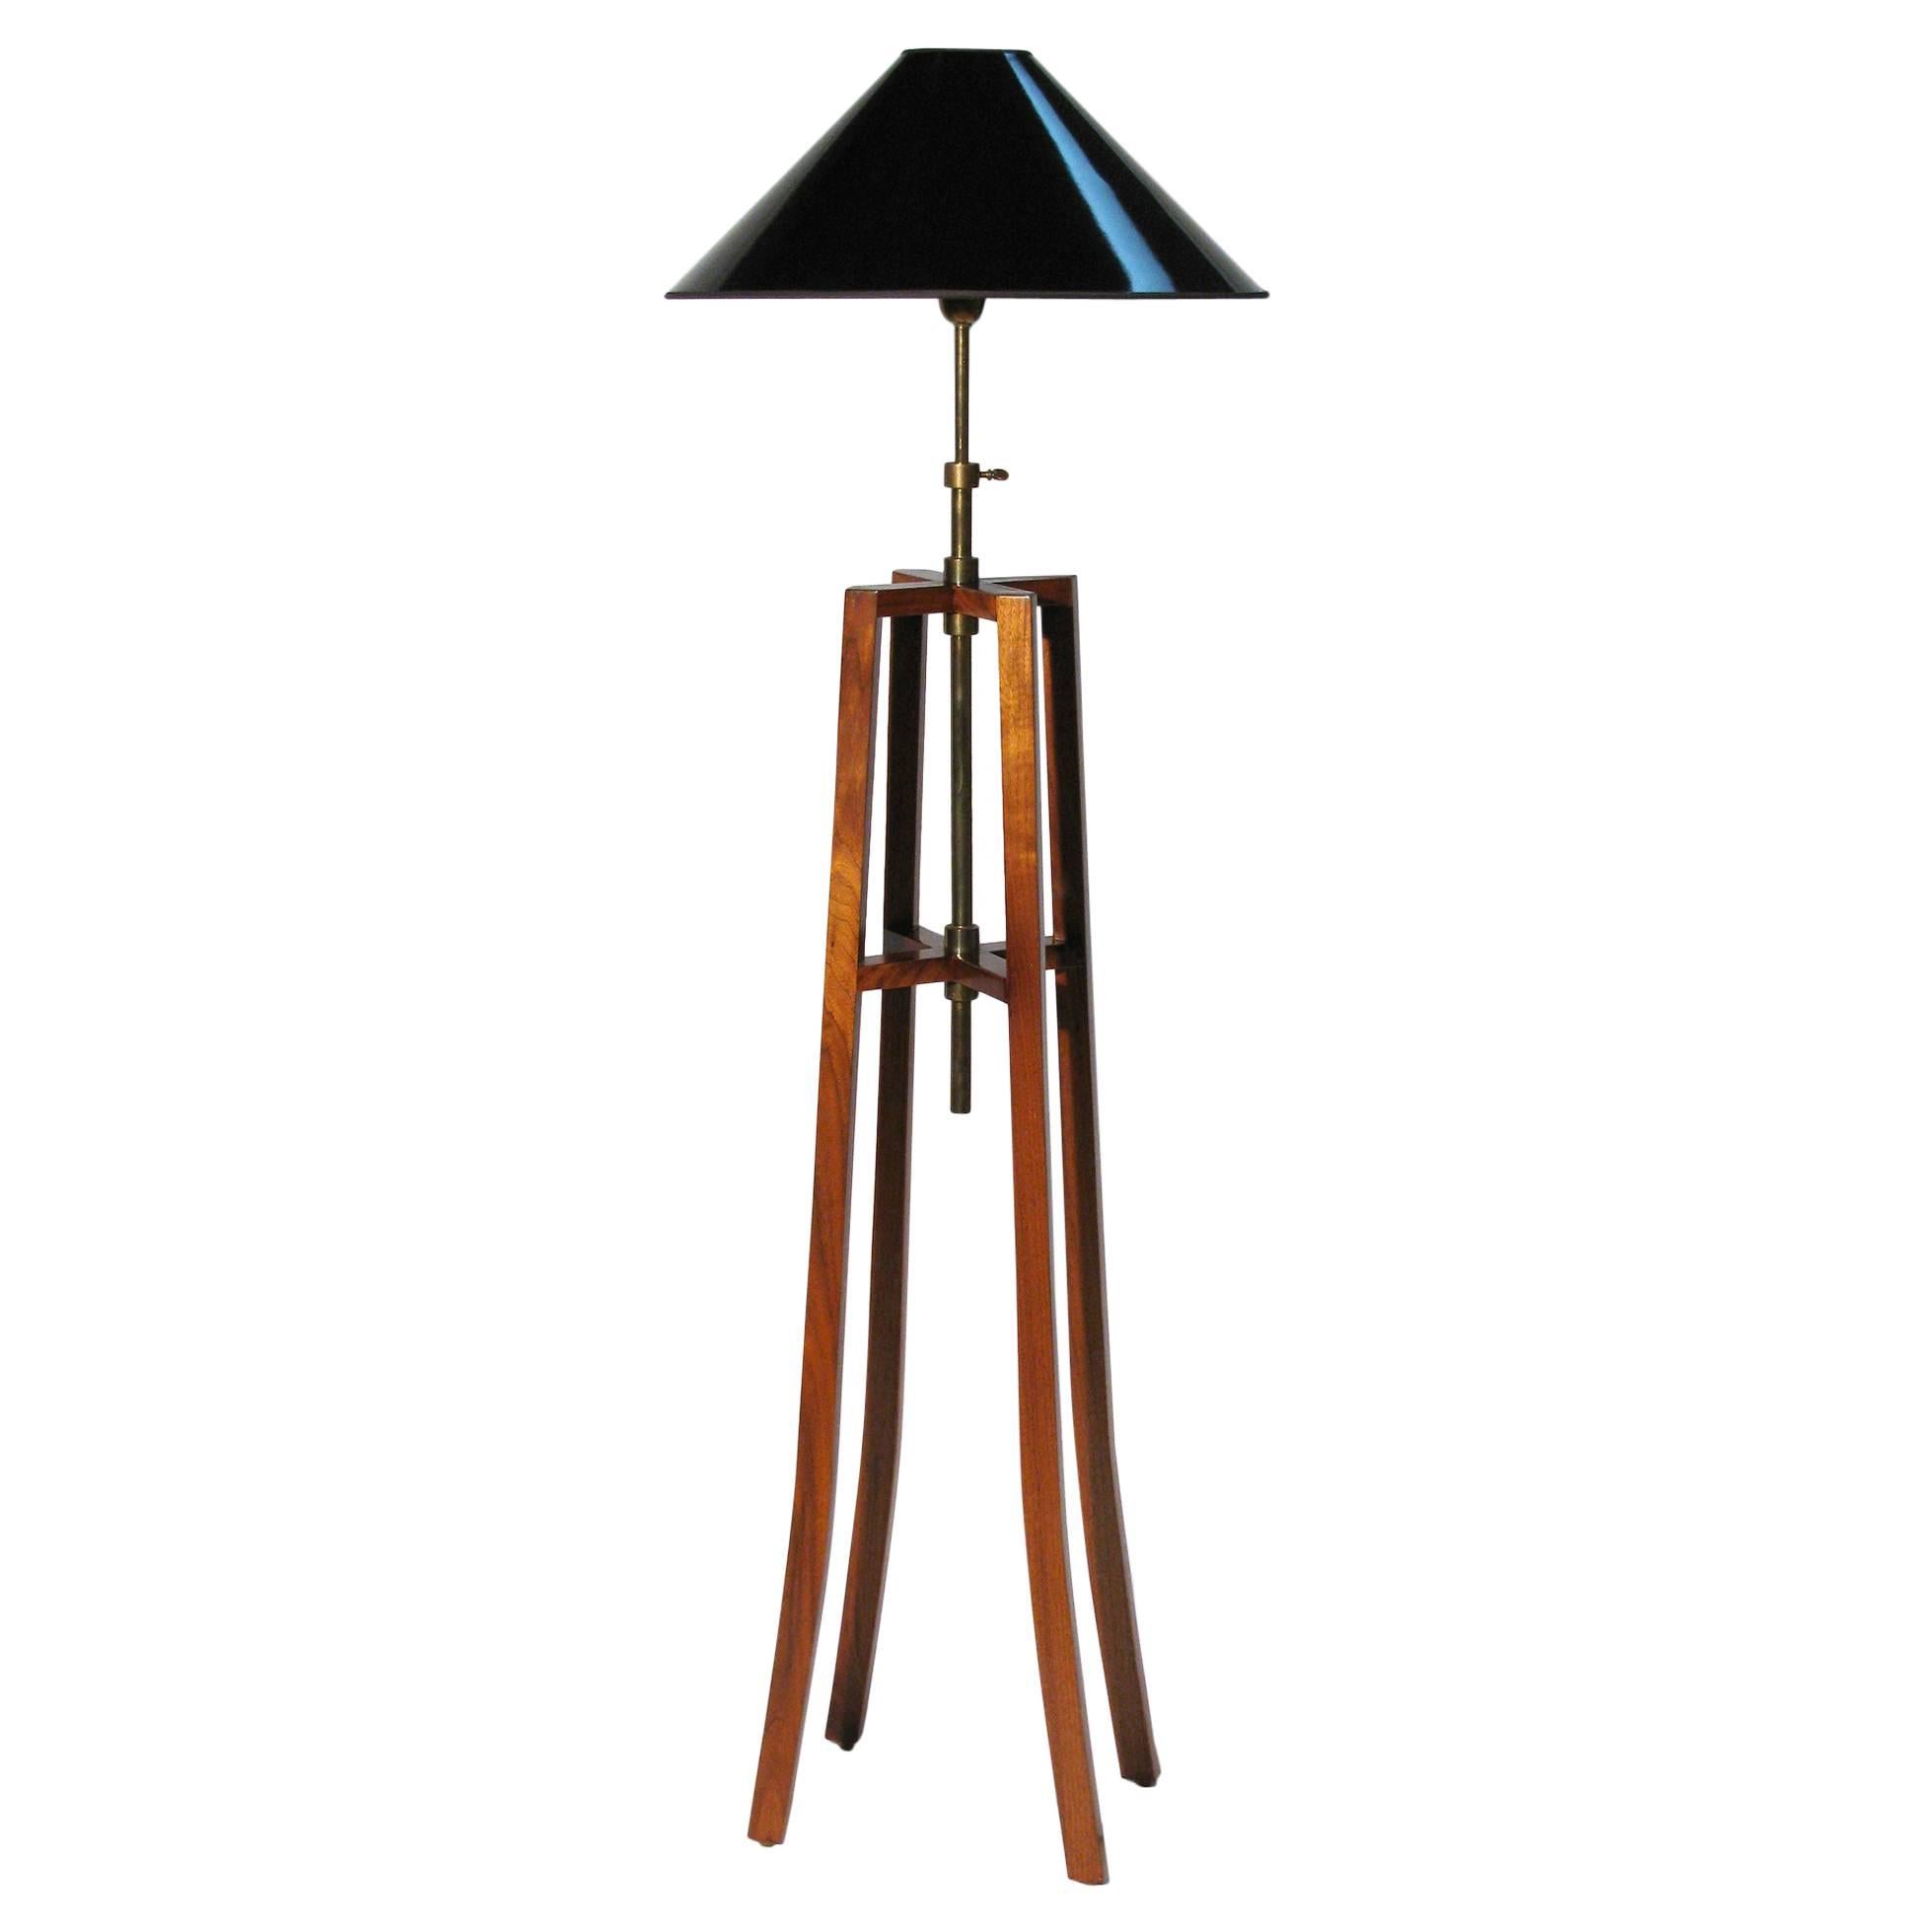 Mirak Collection "Chevalet" Floor Lamp For Sale